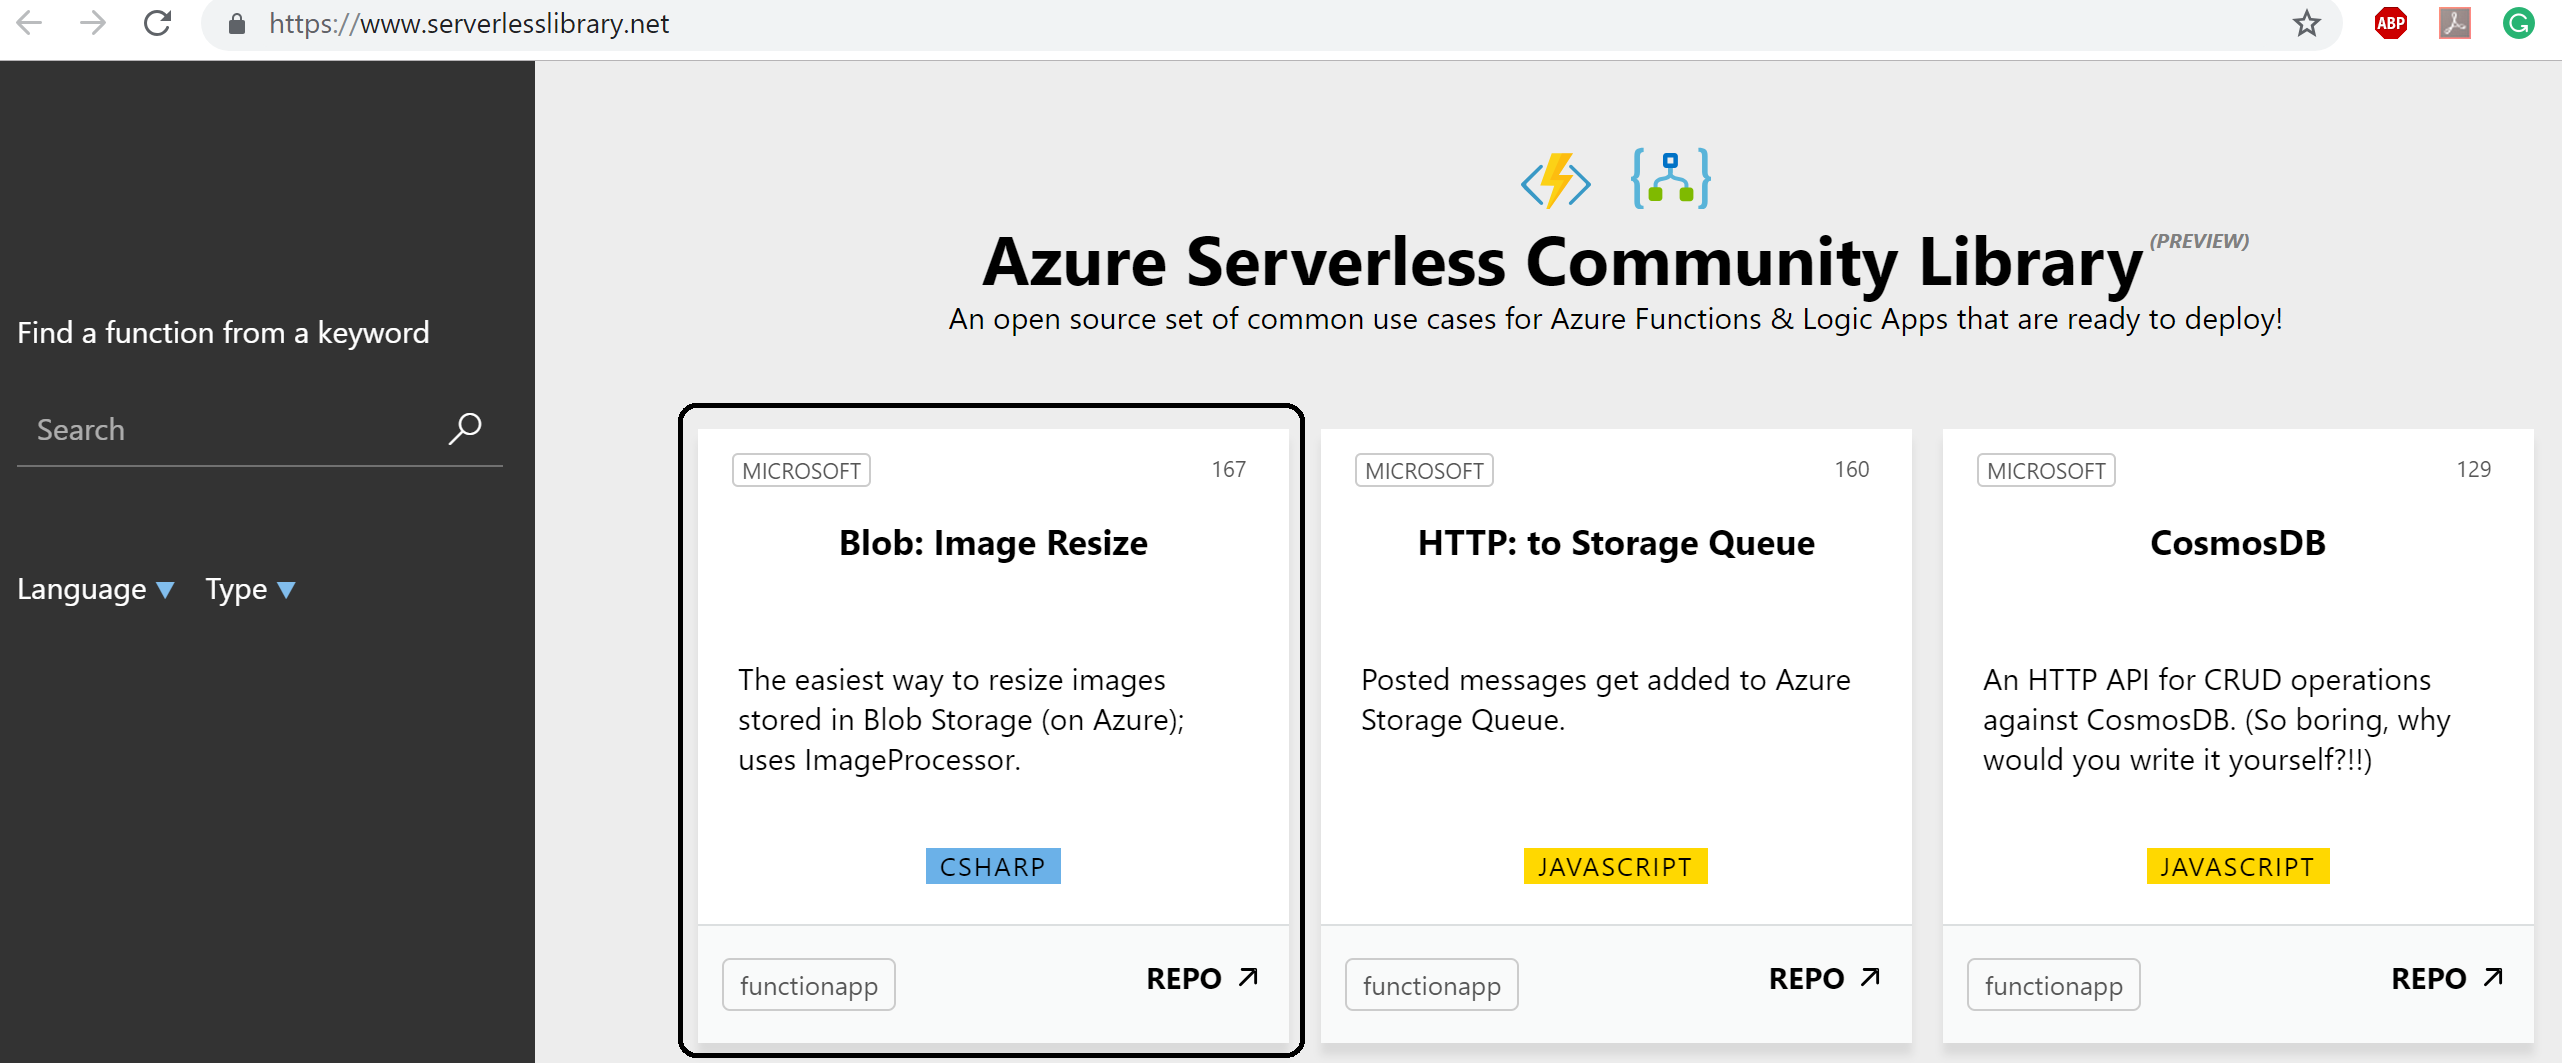 Azure Serverless Community Library